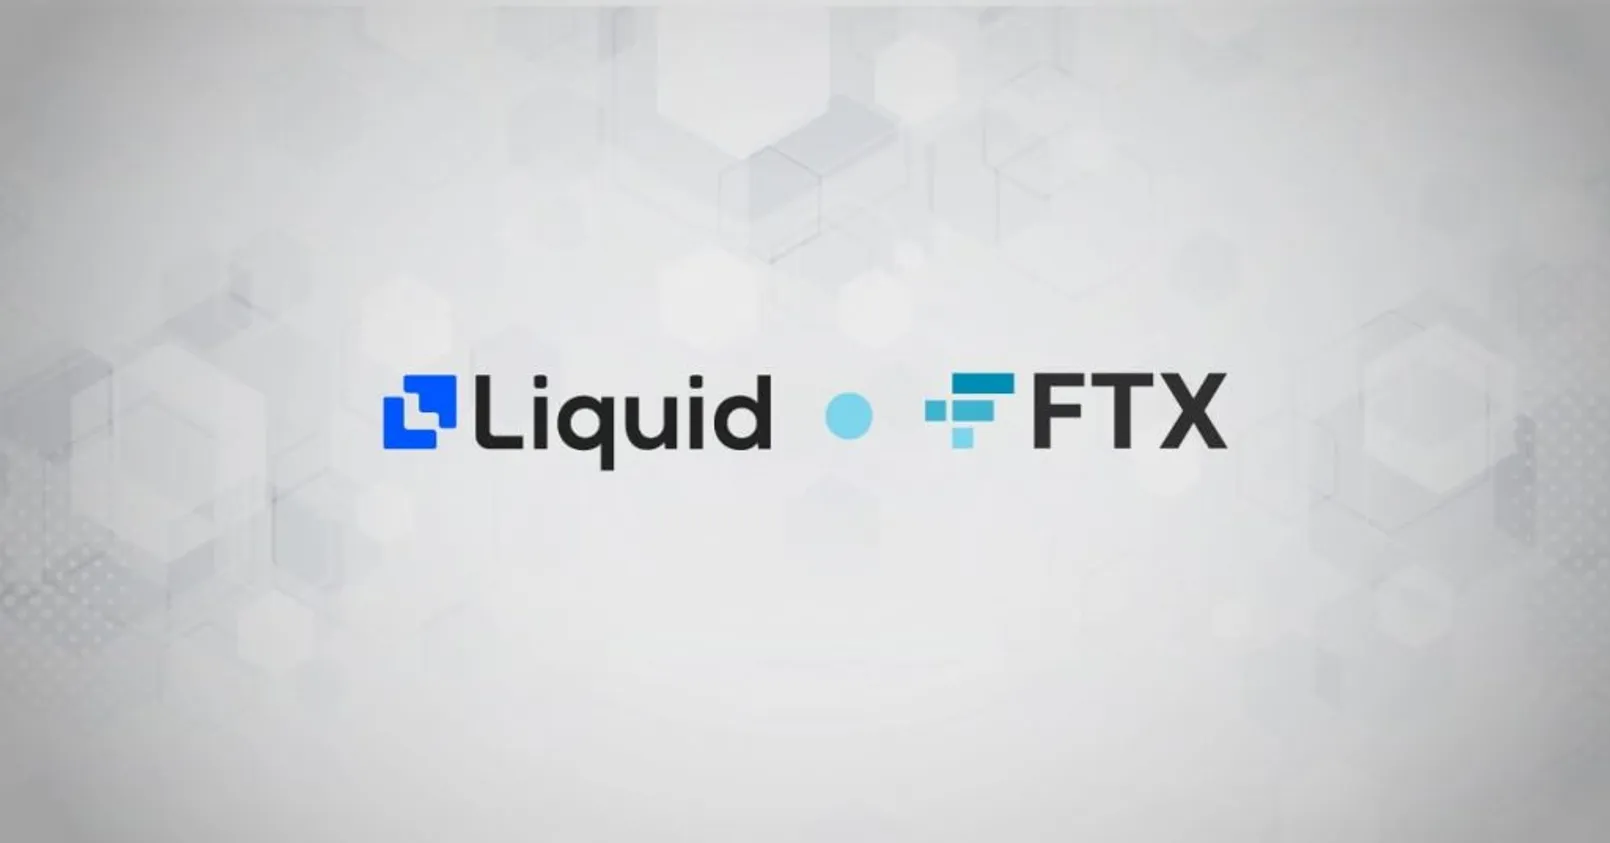 Ftx Acquires Japanese Cryptocurrency Exchange Liquid 1024x536 1.jpg